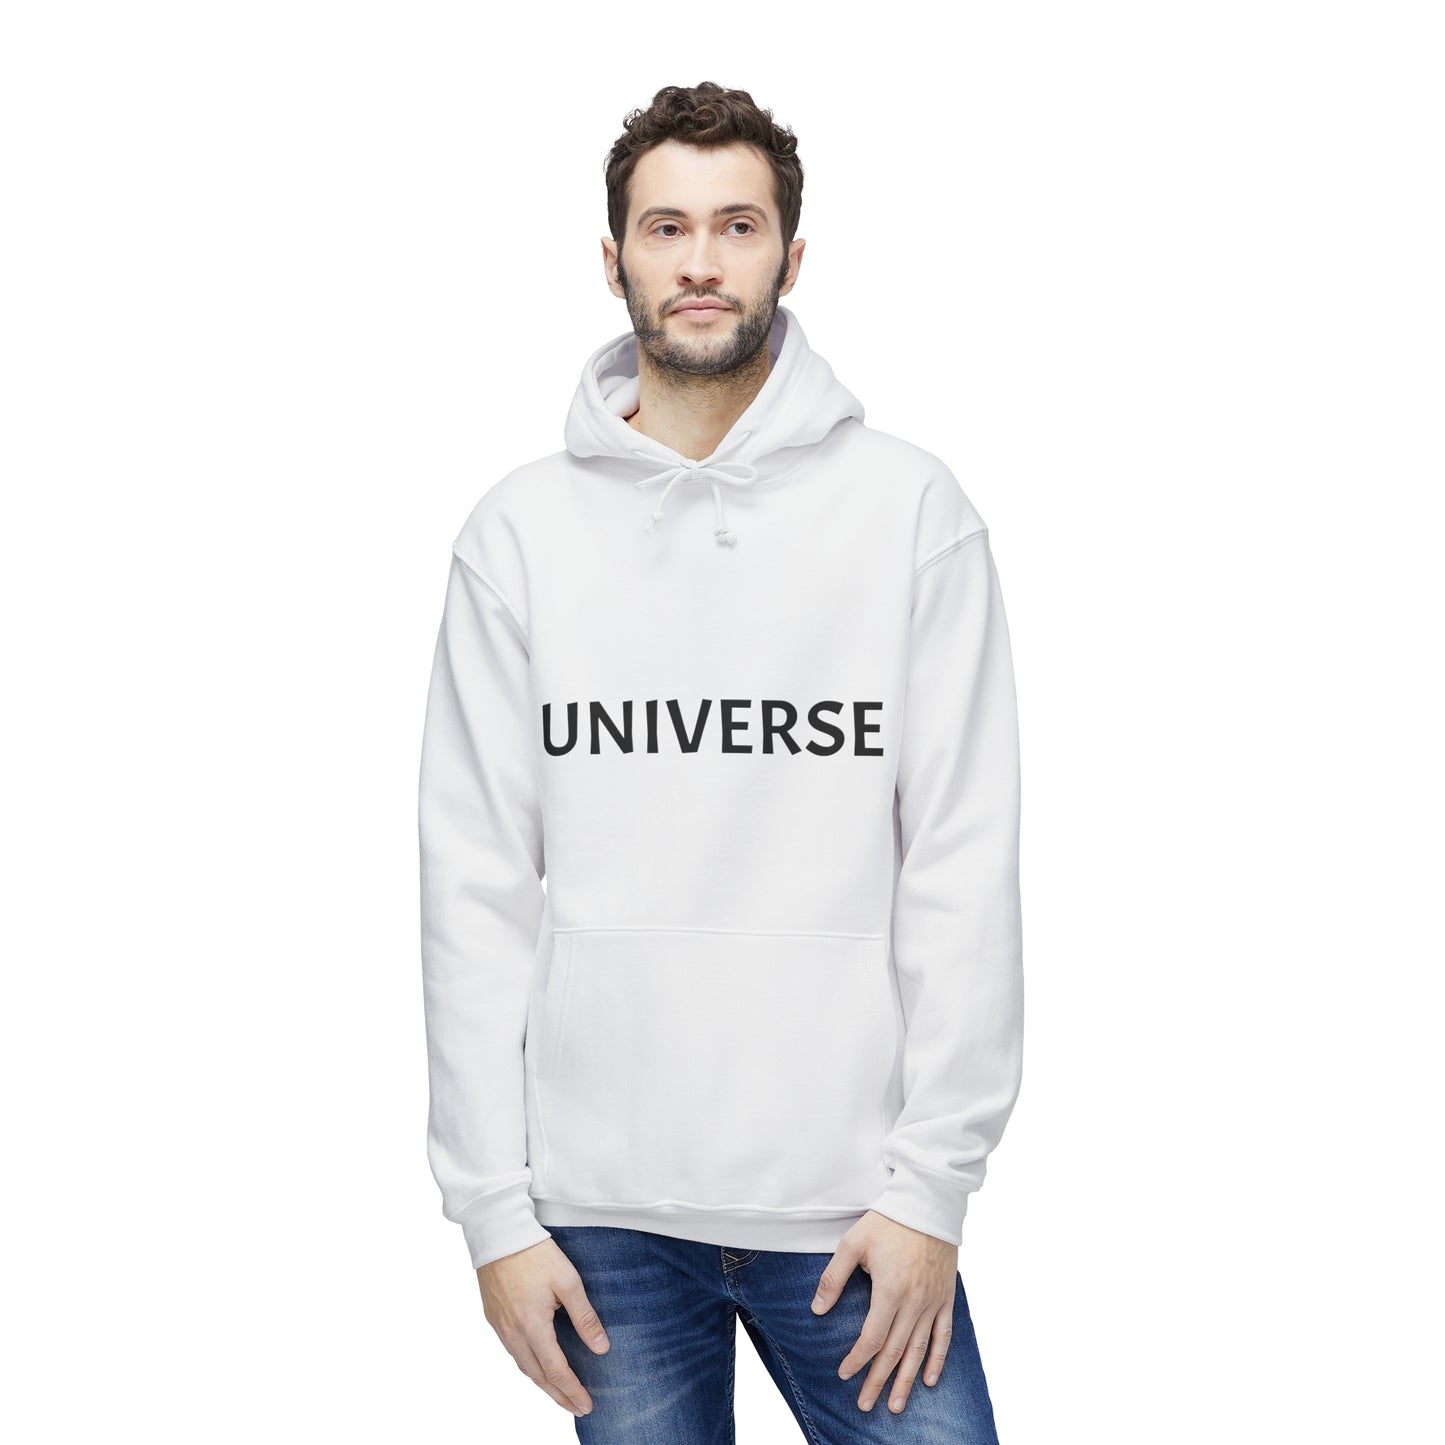 Unisex Hooded Sweatshirt, Made in US